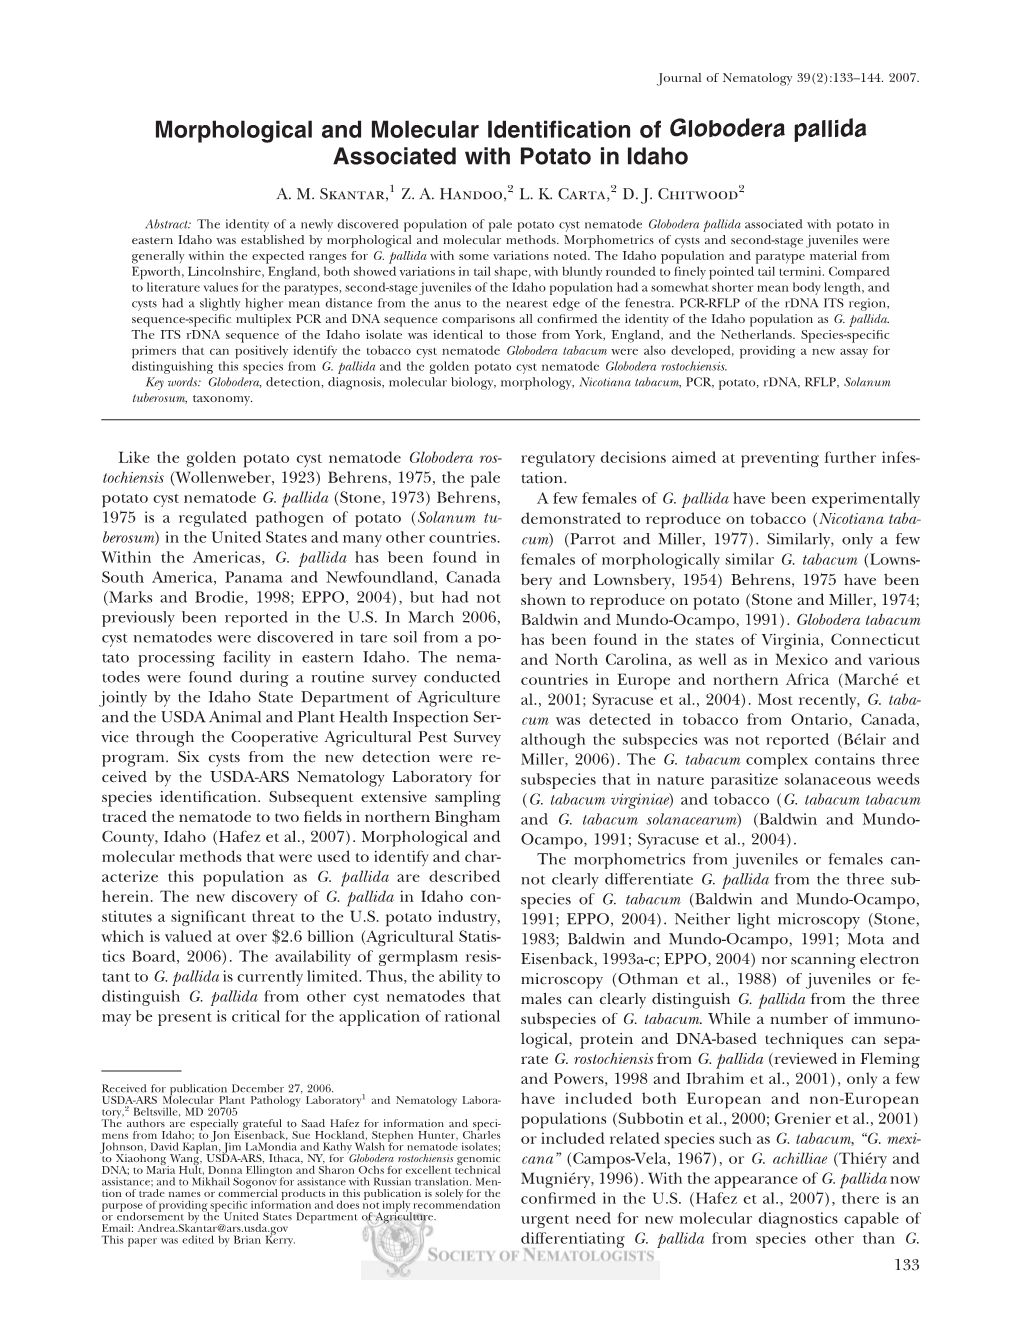 Morphological and Molecular Identification of Globodera Pallida Associated with Potato in Idaho